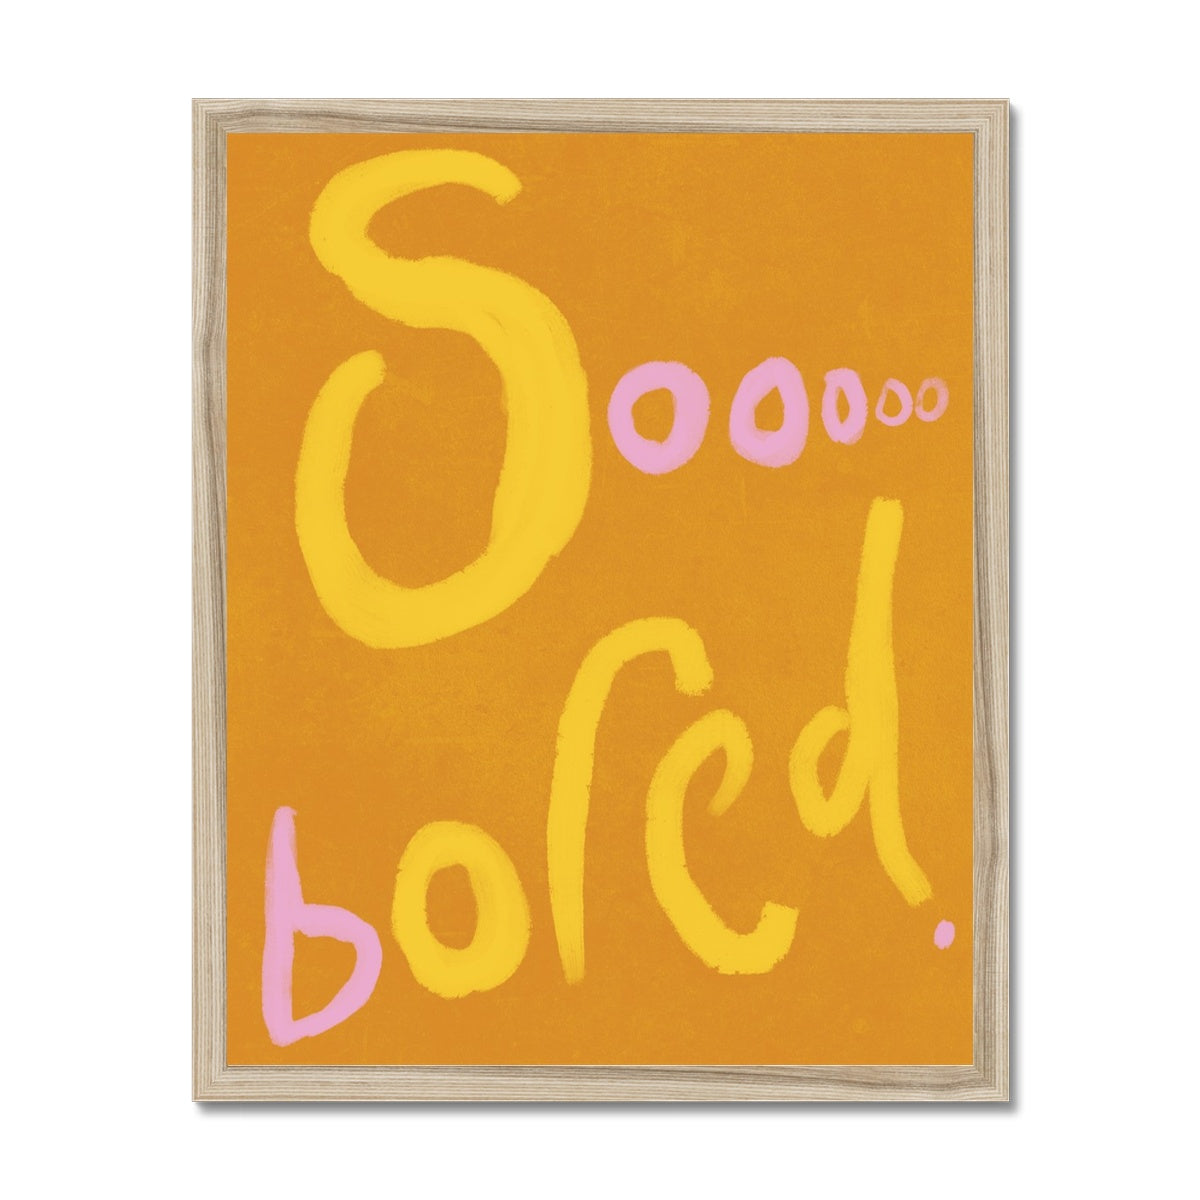 Sooooo Bored Print - Brown, Yellow, Pink Framed Print